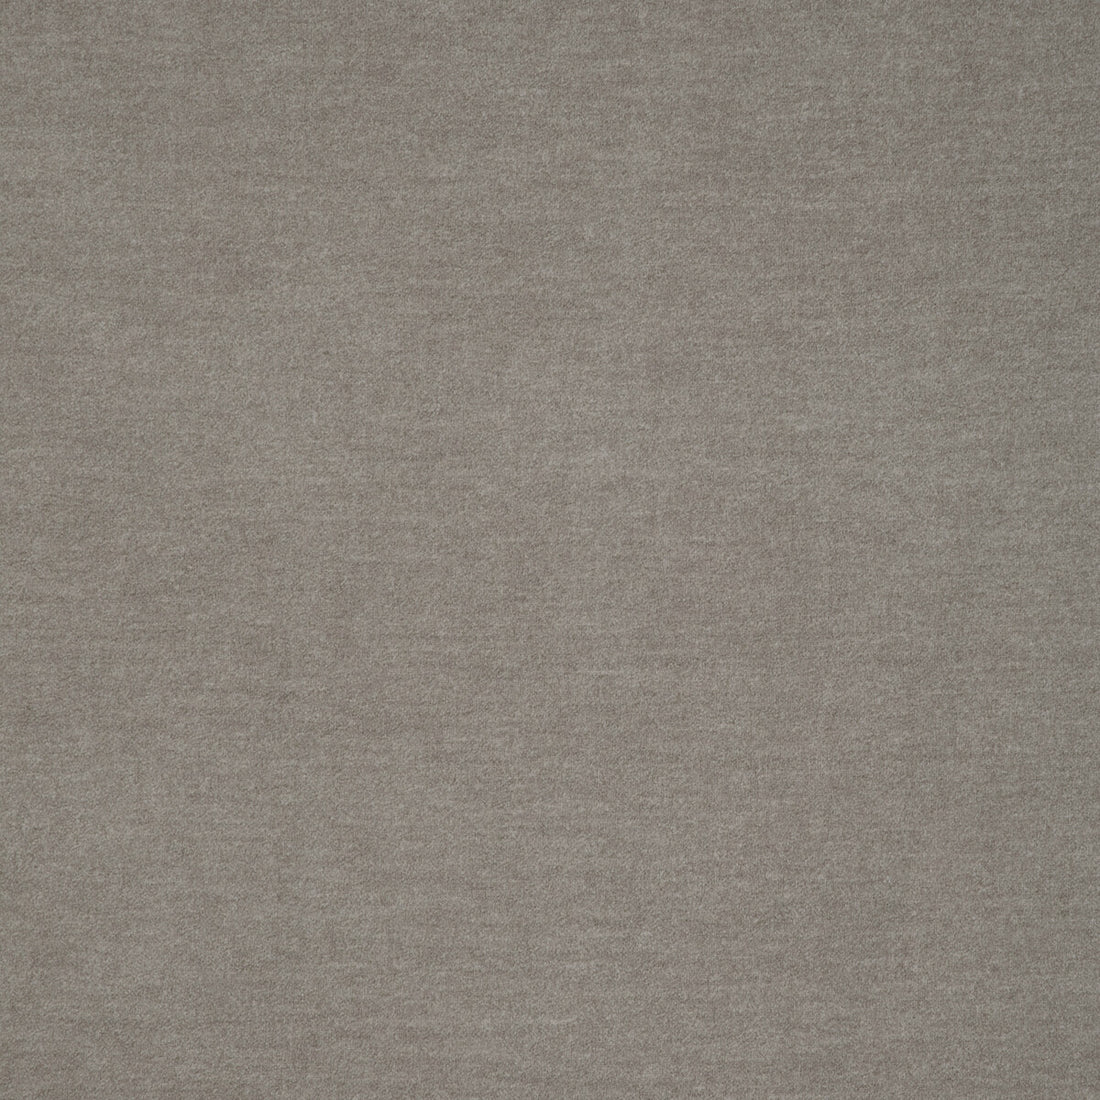 Kravet Smart fabric in 37000-11 color - pattern 37000.11.0 - by Kravet Smart in the Performance Kravetarmor collection